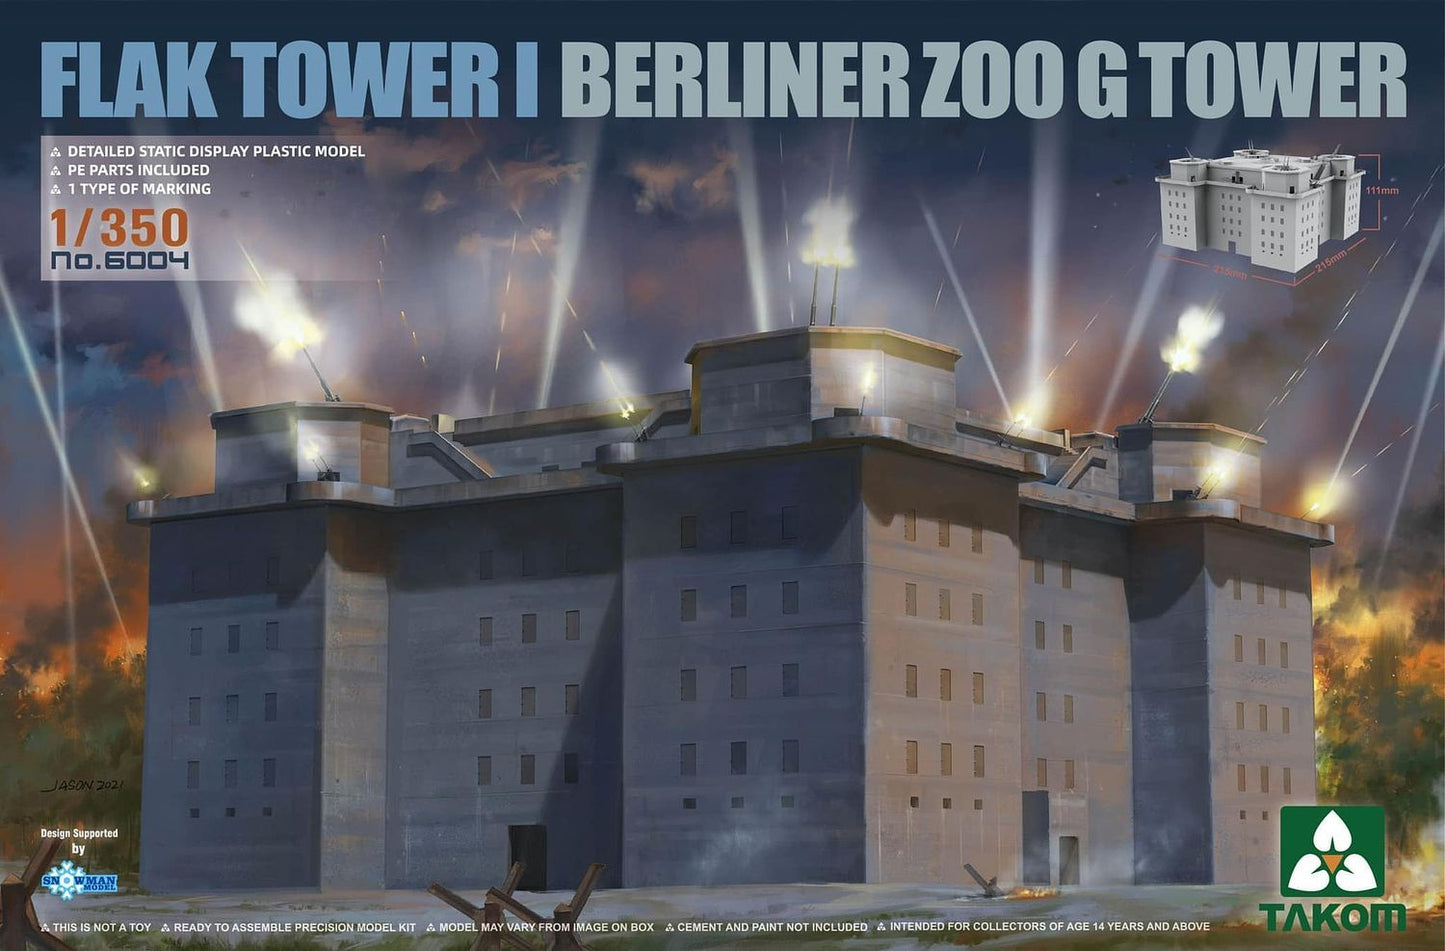 Takom 1/350 Germany Flak Tower I Berlin Zoo Tower (G Tower)